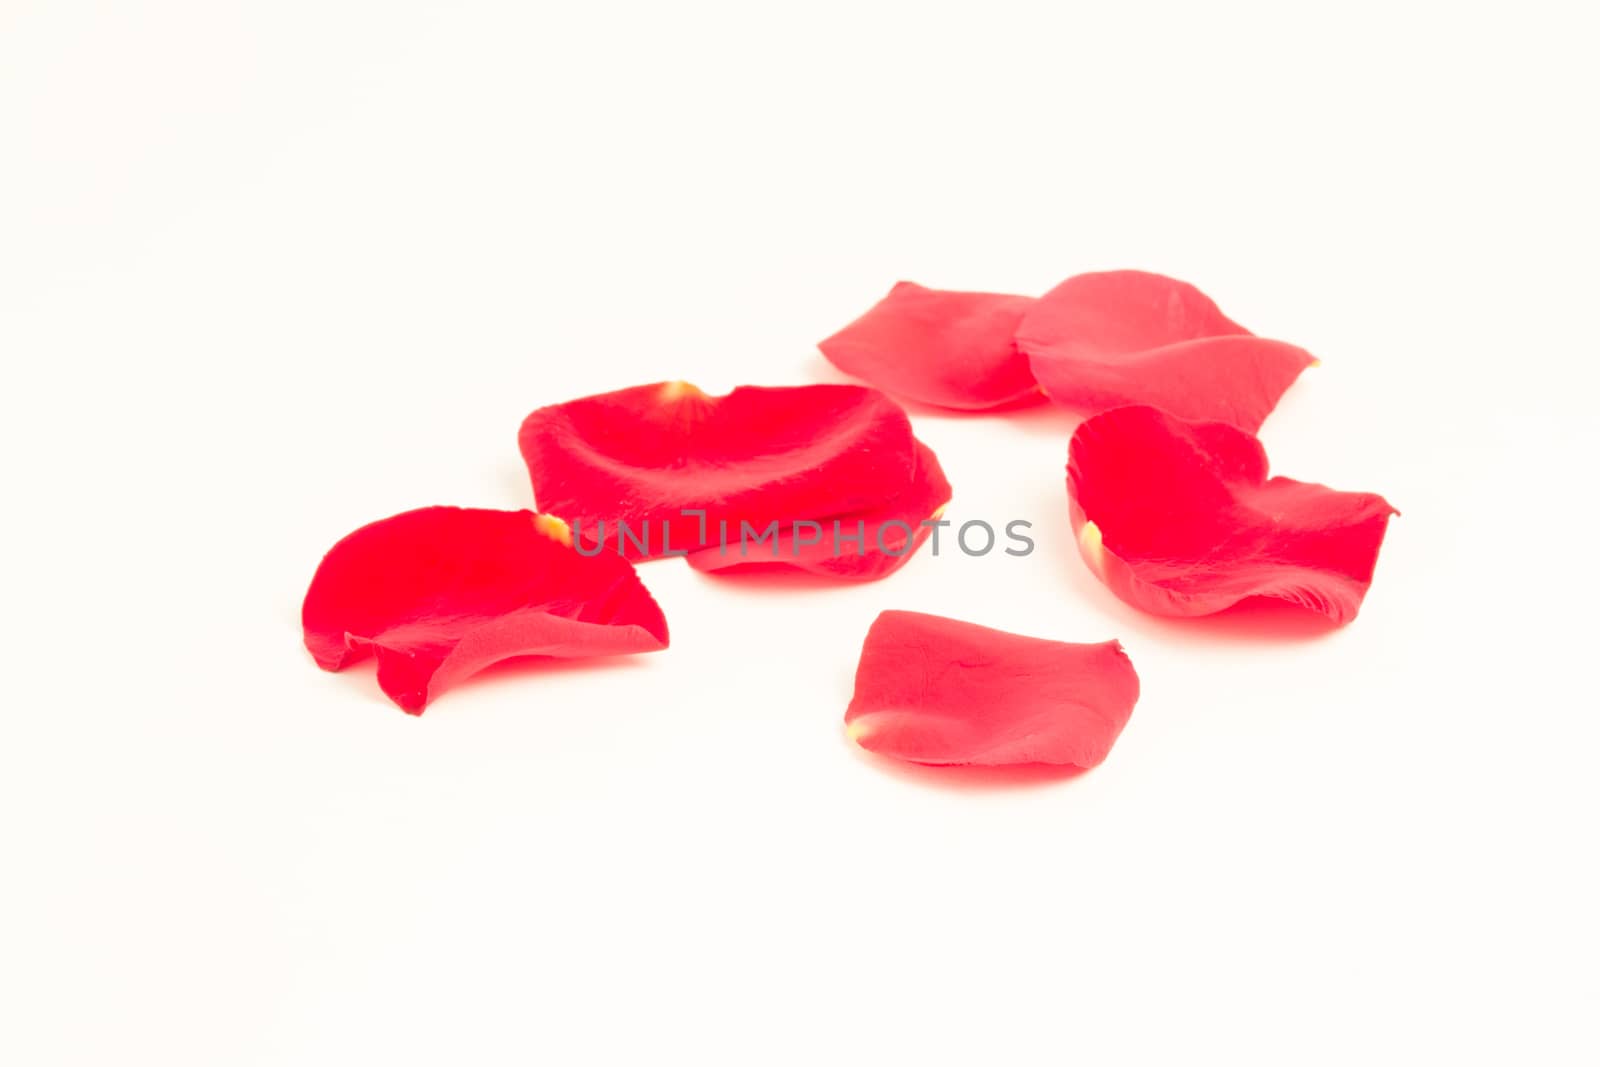 Scattered rose petals by Wavebreakmedia